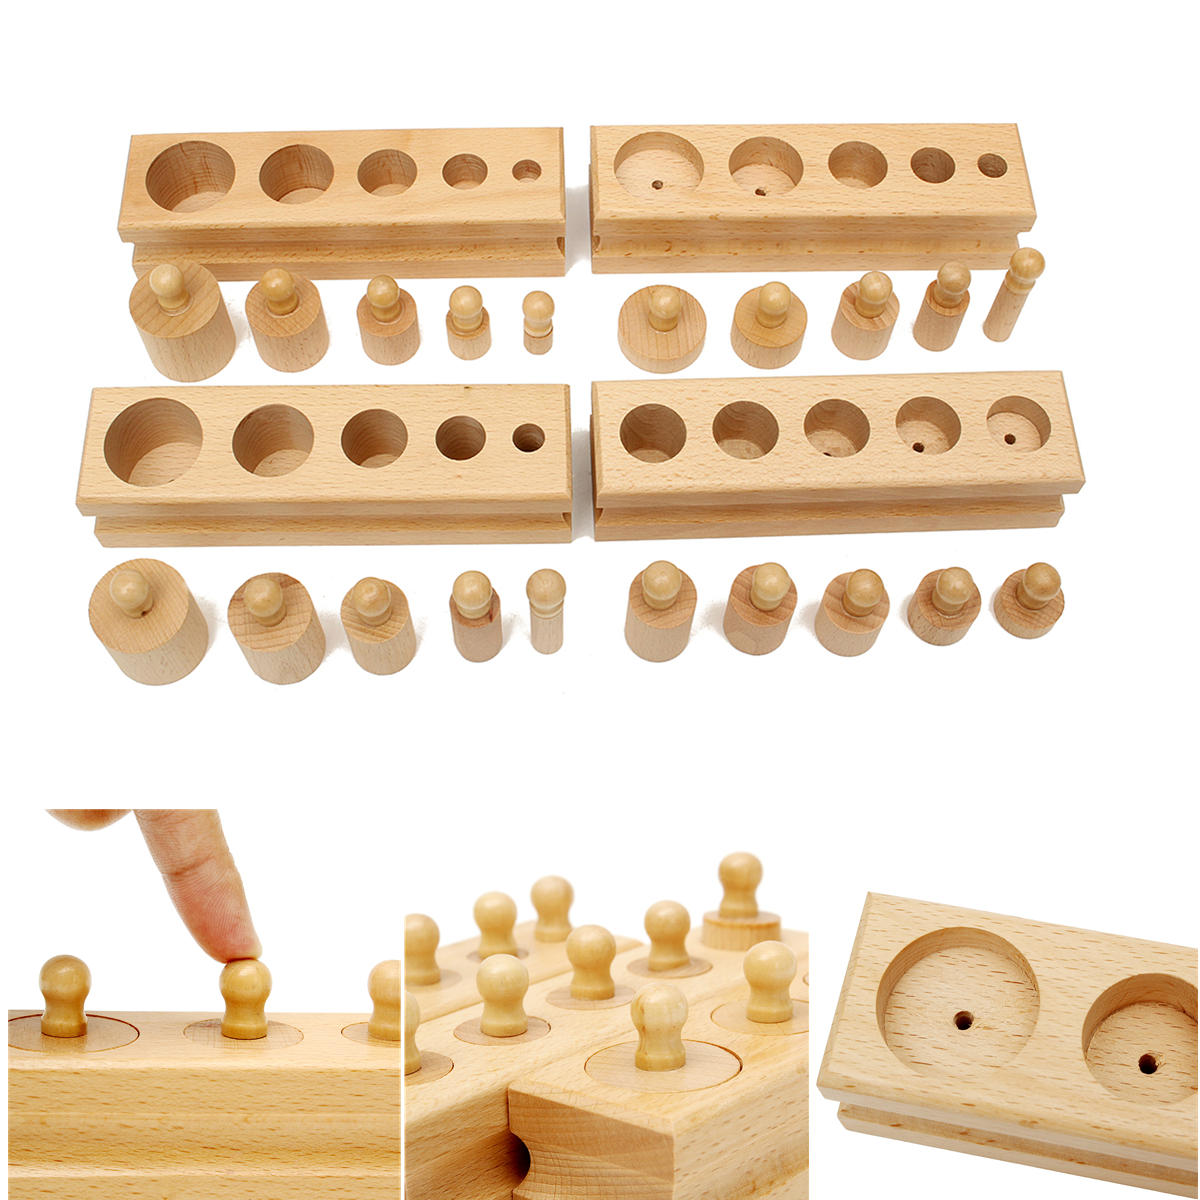 NEW Knobbed Cylinder Blocks Family Set Wooden Montessori Educational Toy 